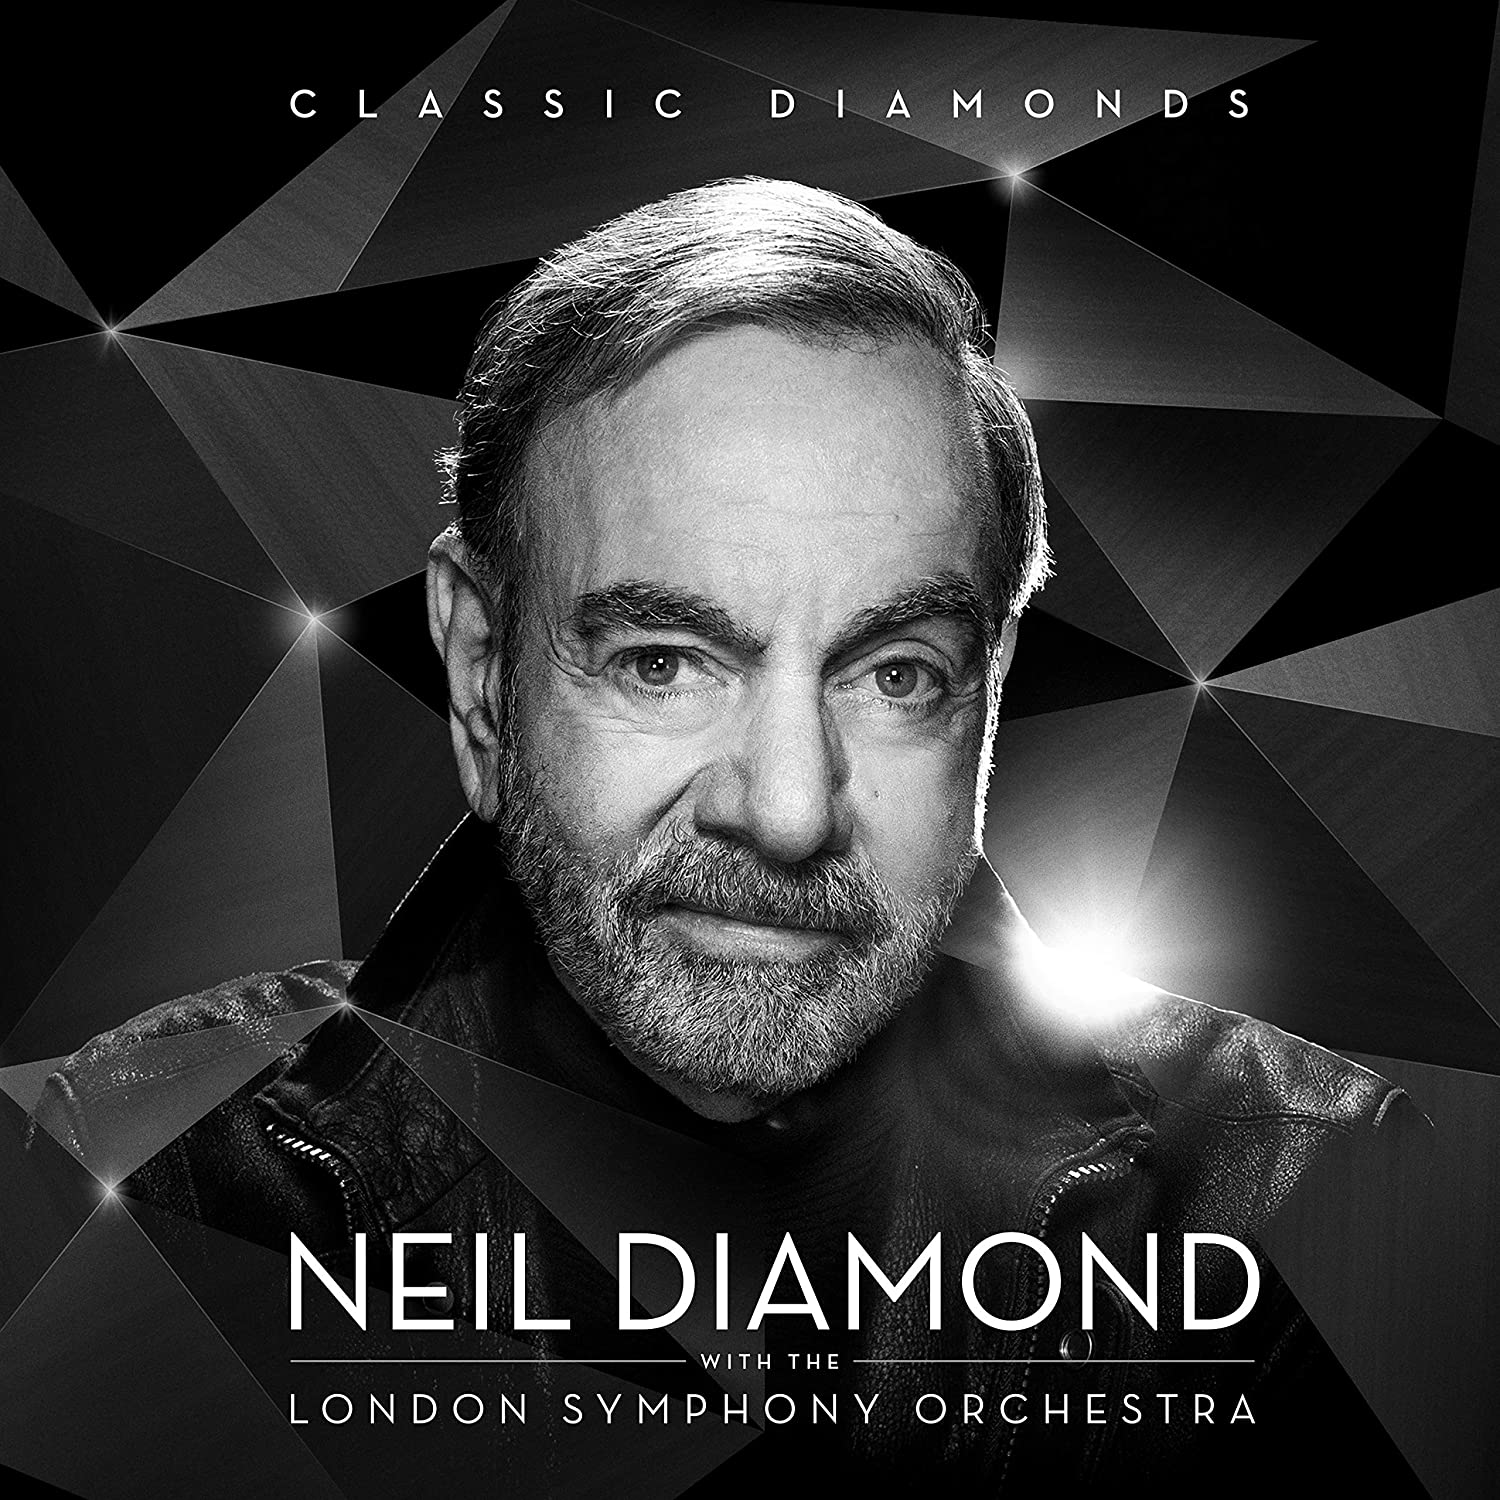 CD Shop - DIAMOND NEIL CLASSIC DIAMONDS WITH THE LONDON SYMPHONY ORCHESTRA